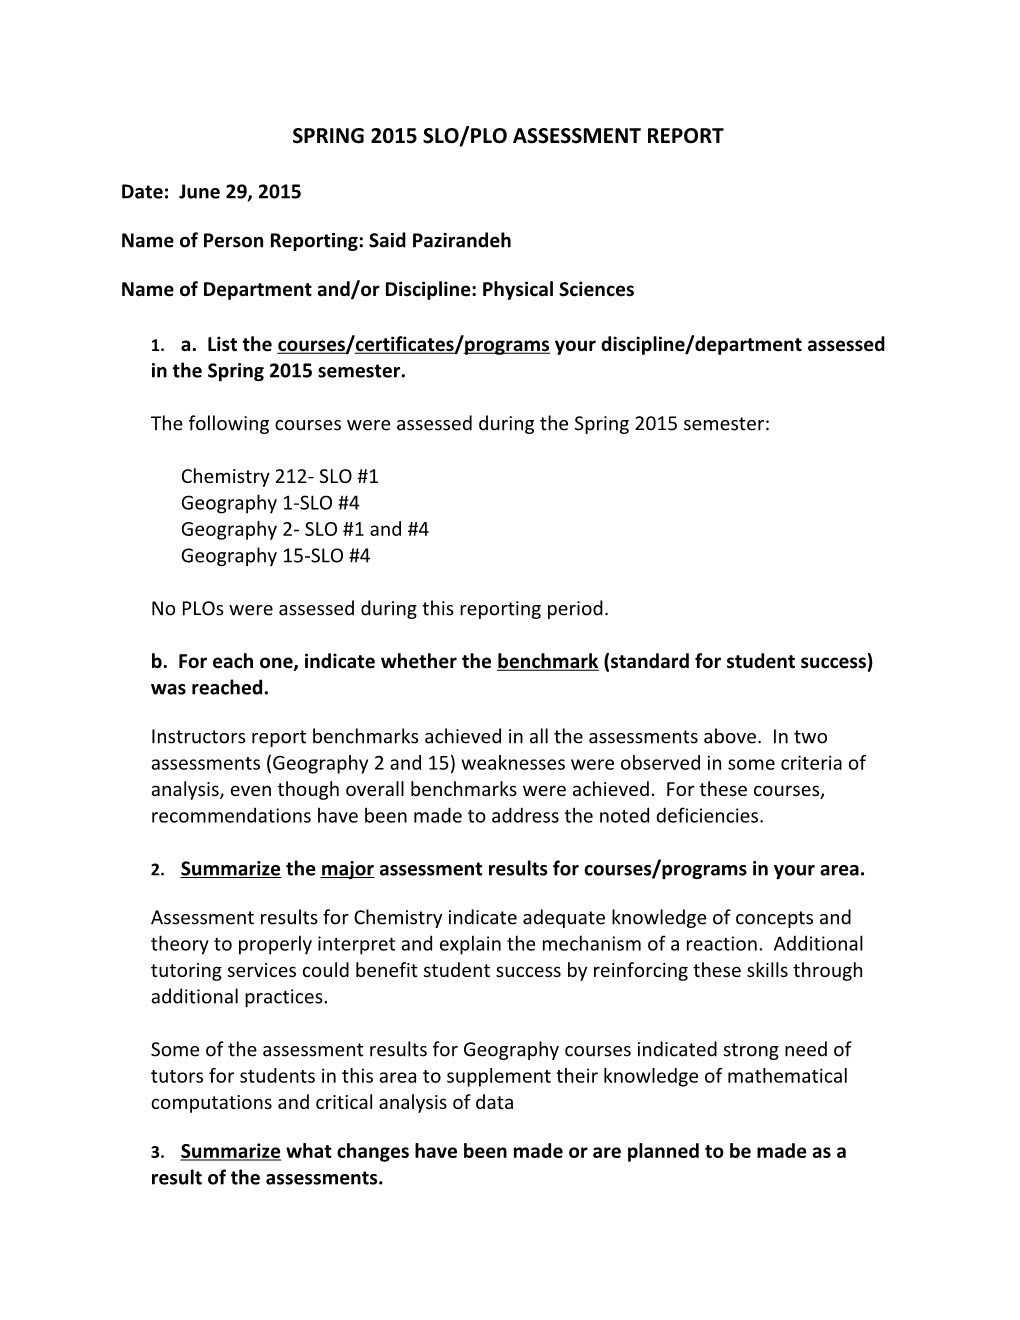 Spring 2015 Slo/Plo Assessment Report